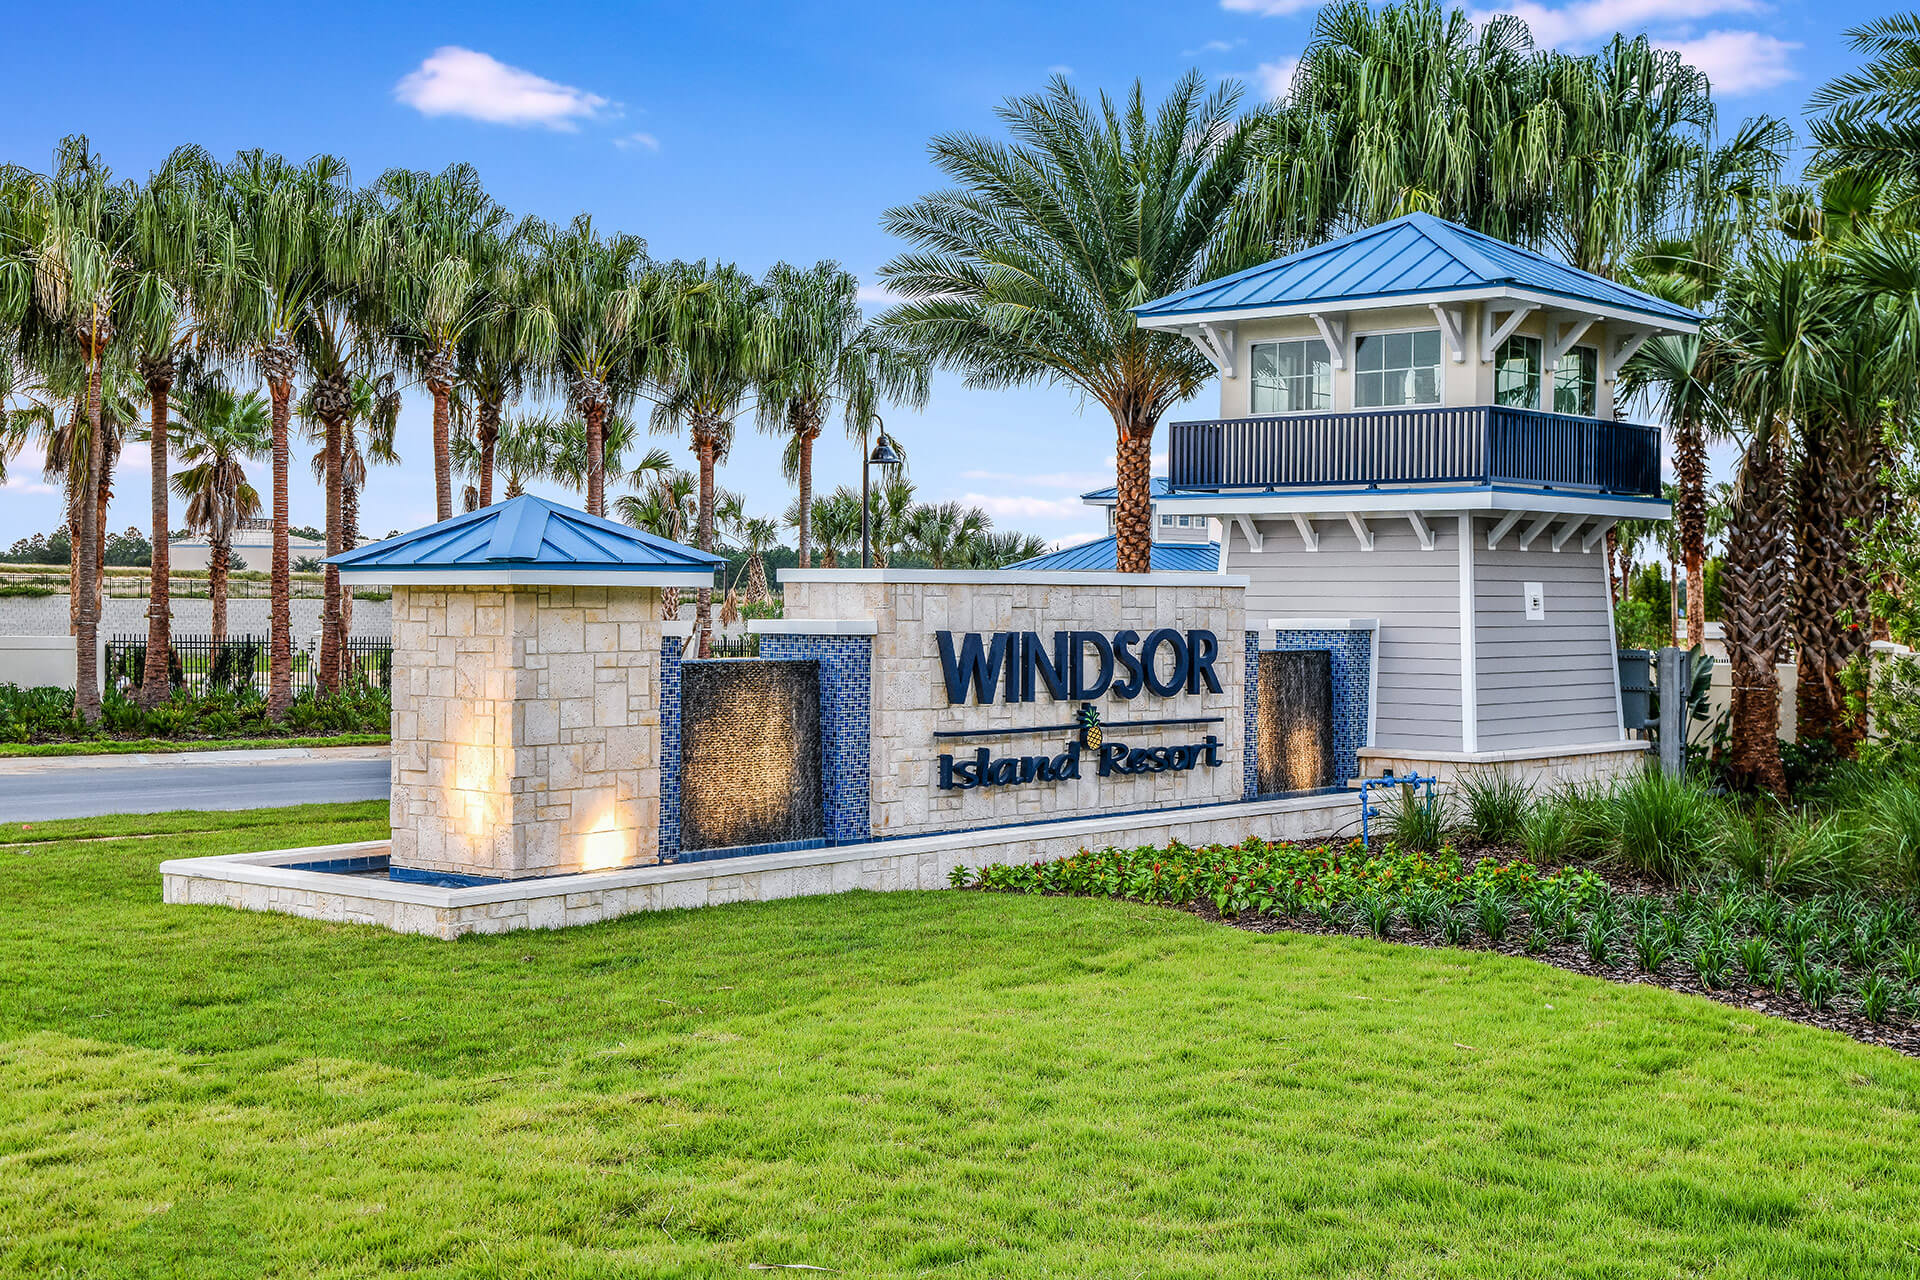 Windsor Island Resort Vacation Rentals - Global Resort Homes